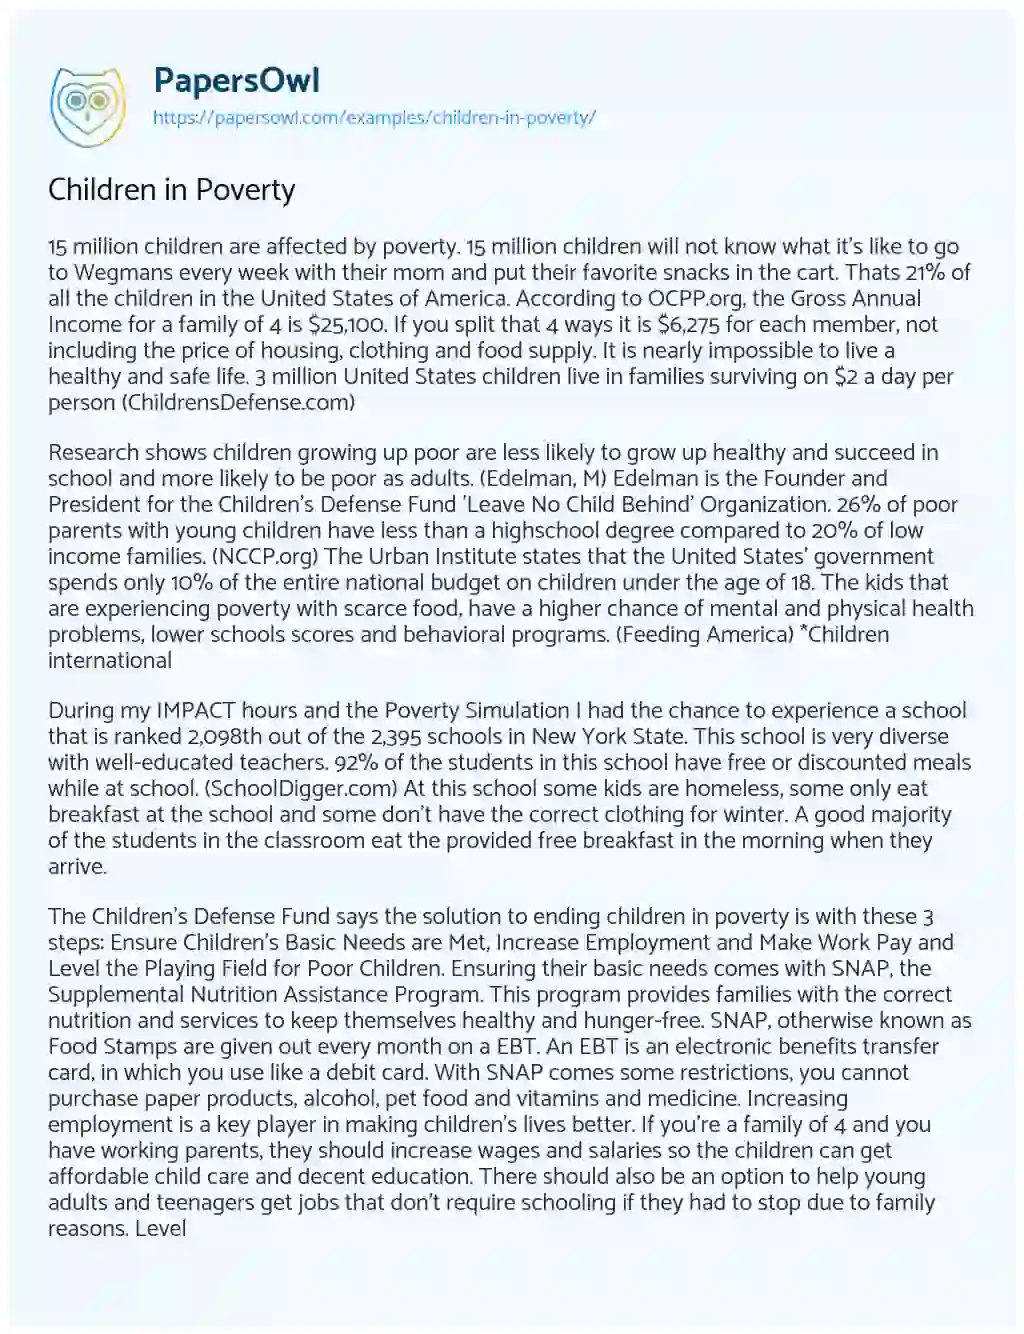 Essay on Children in Poverty